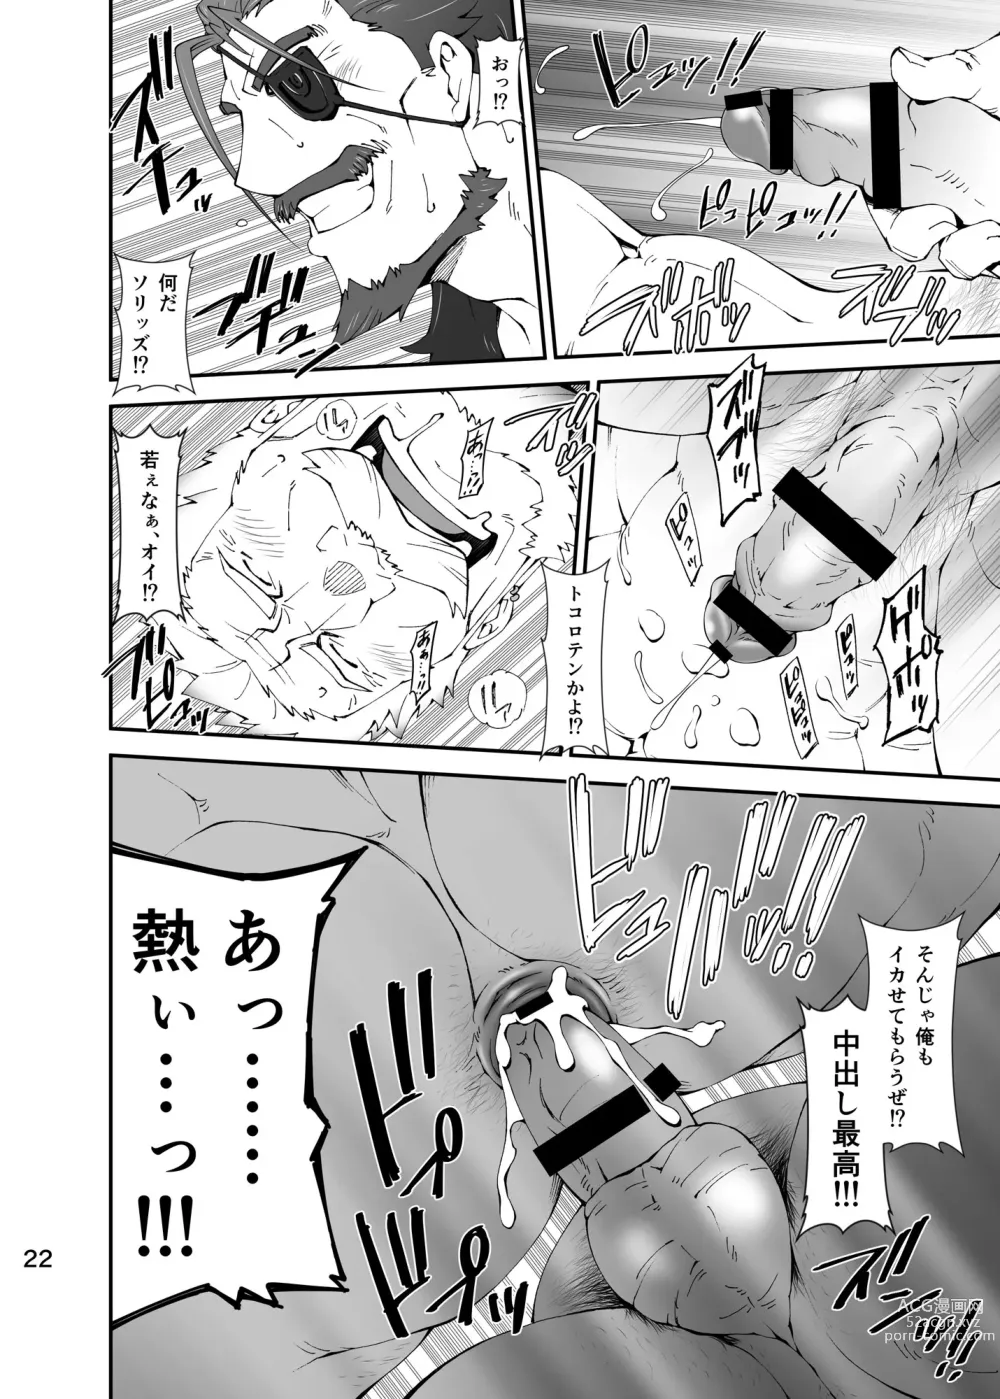 Page 21 of doujinshi GOOD LOVE-RU DARKNESS